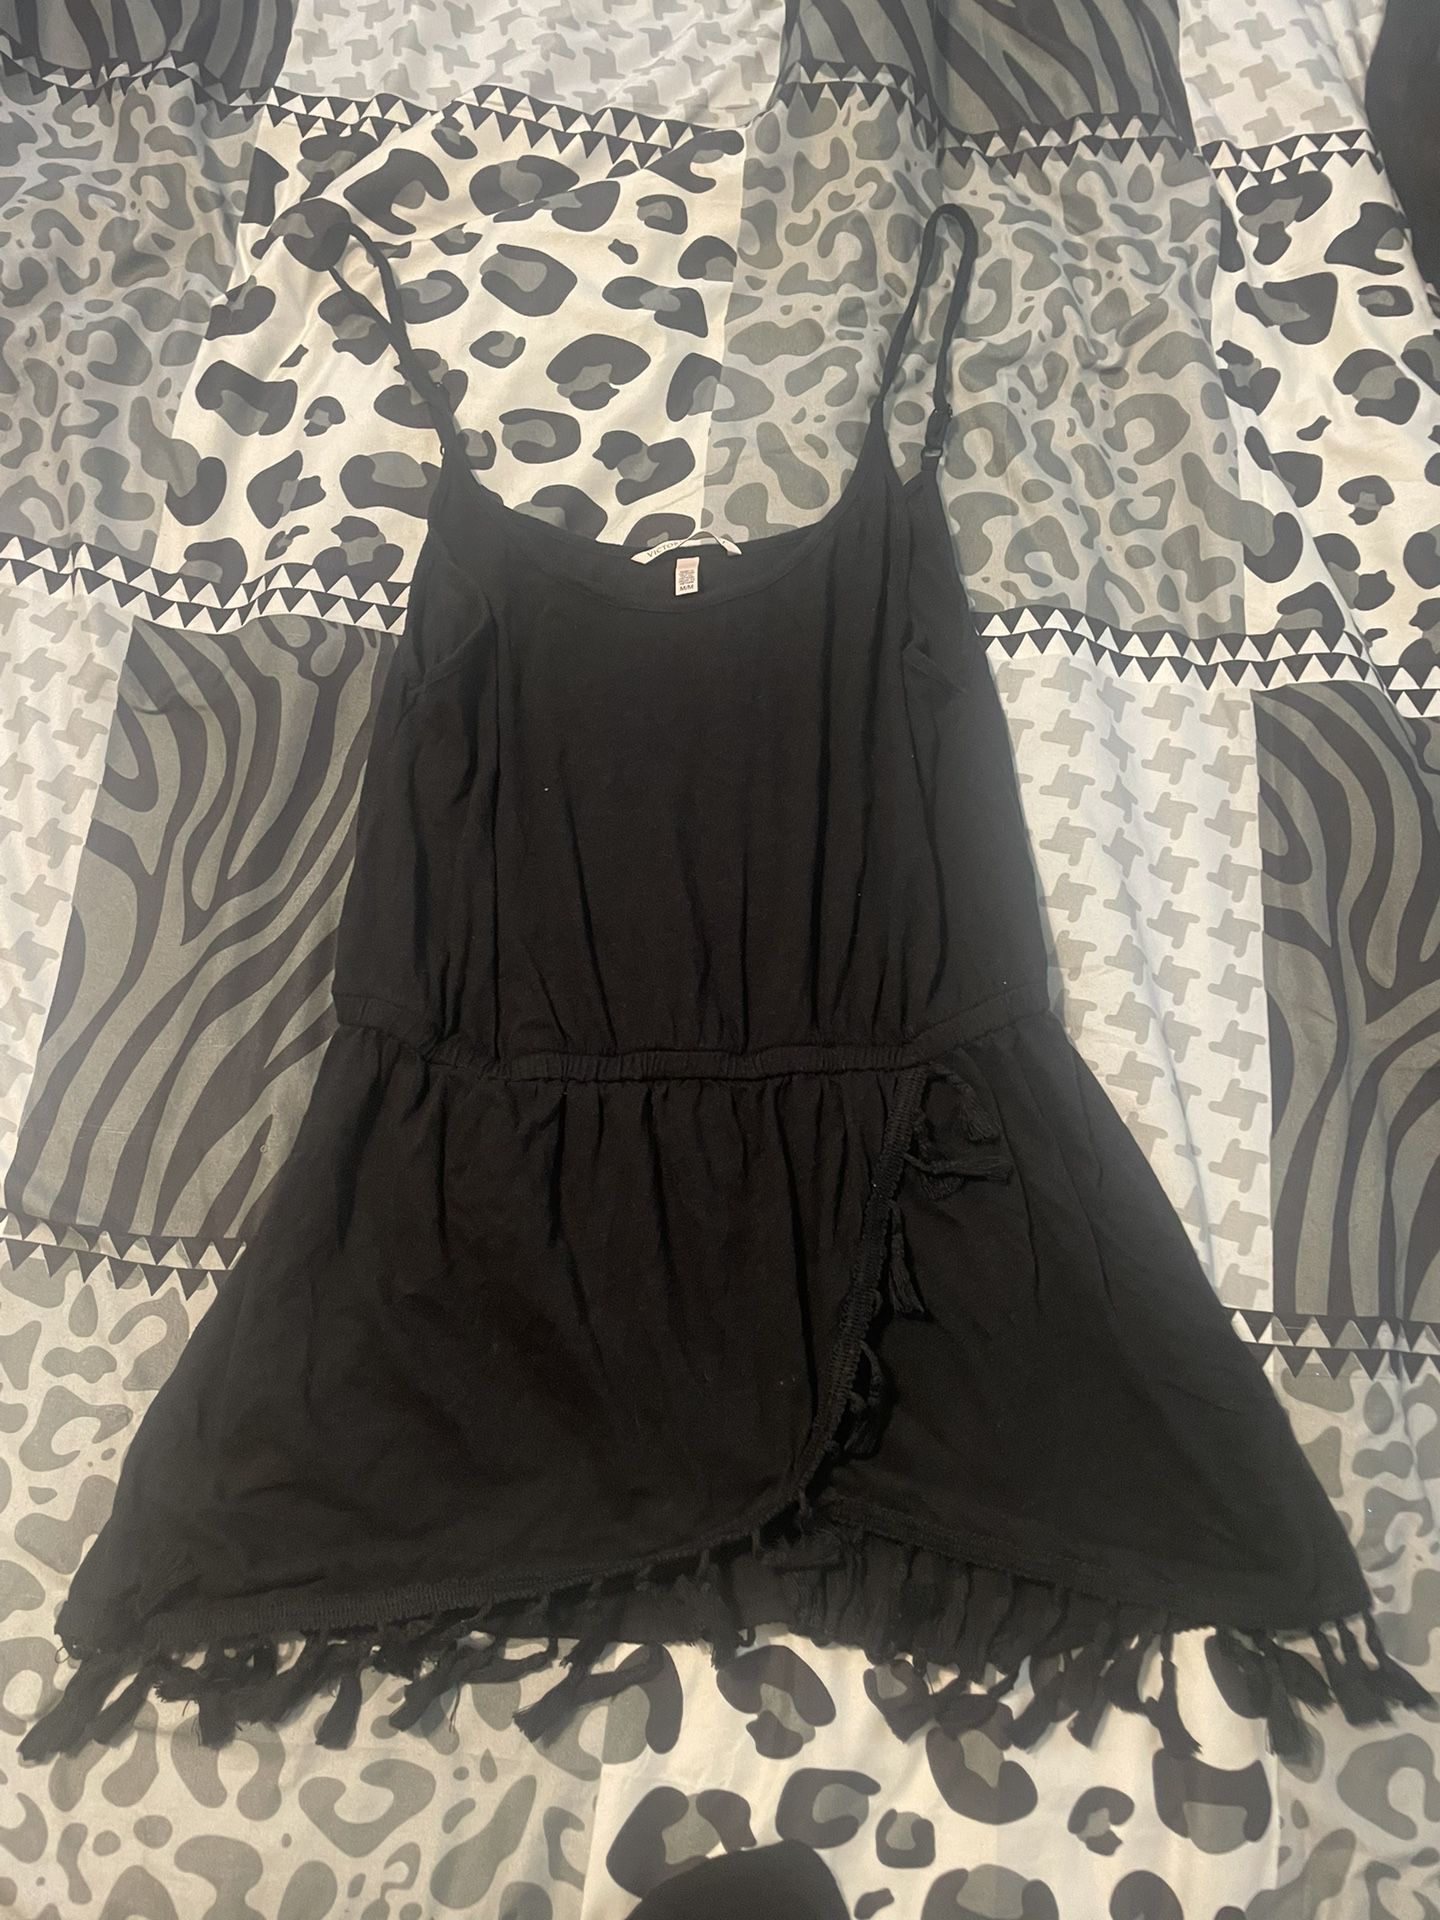 Victoria’s Secret Medium Beach Cover Up Dress Black